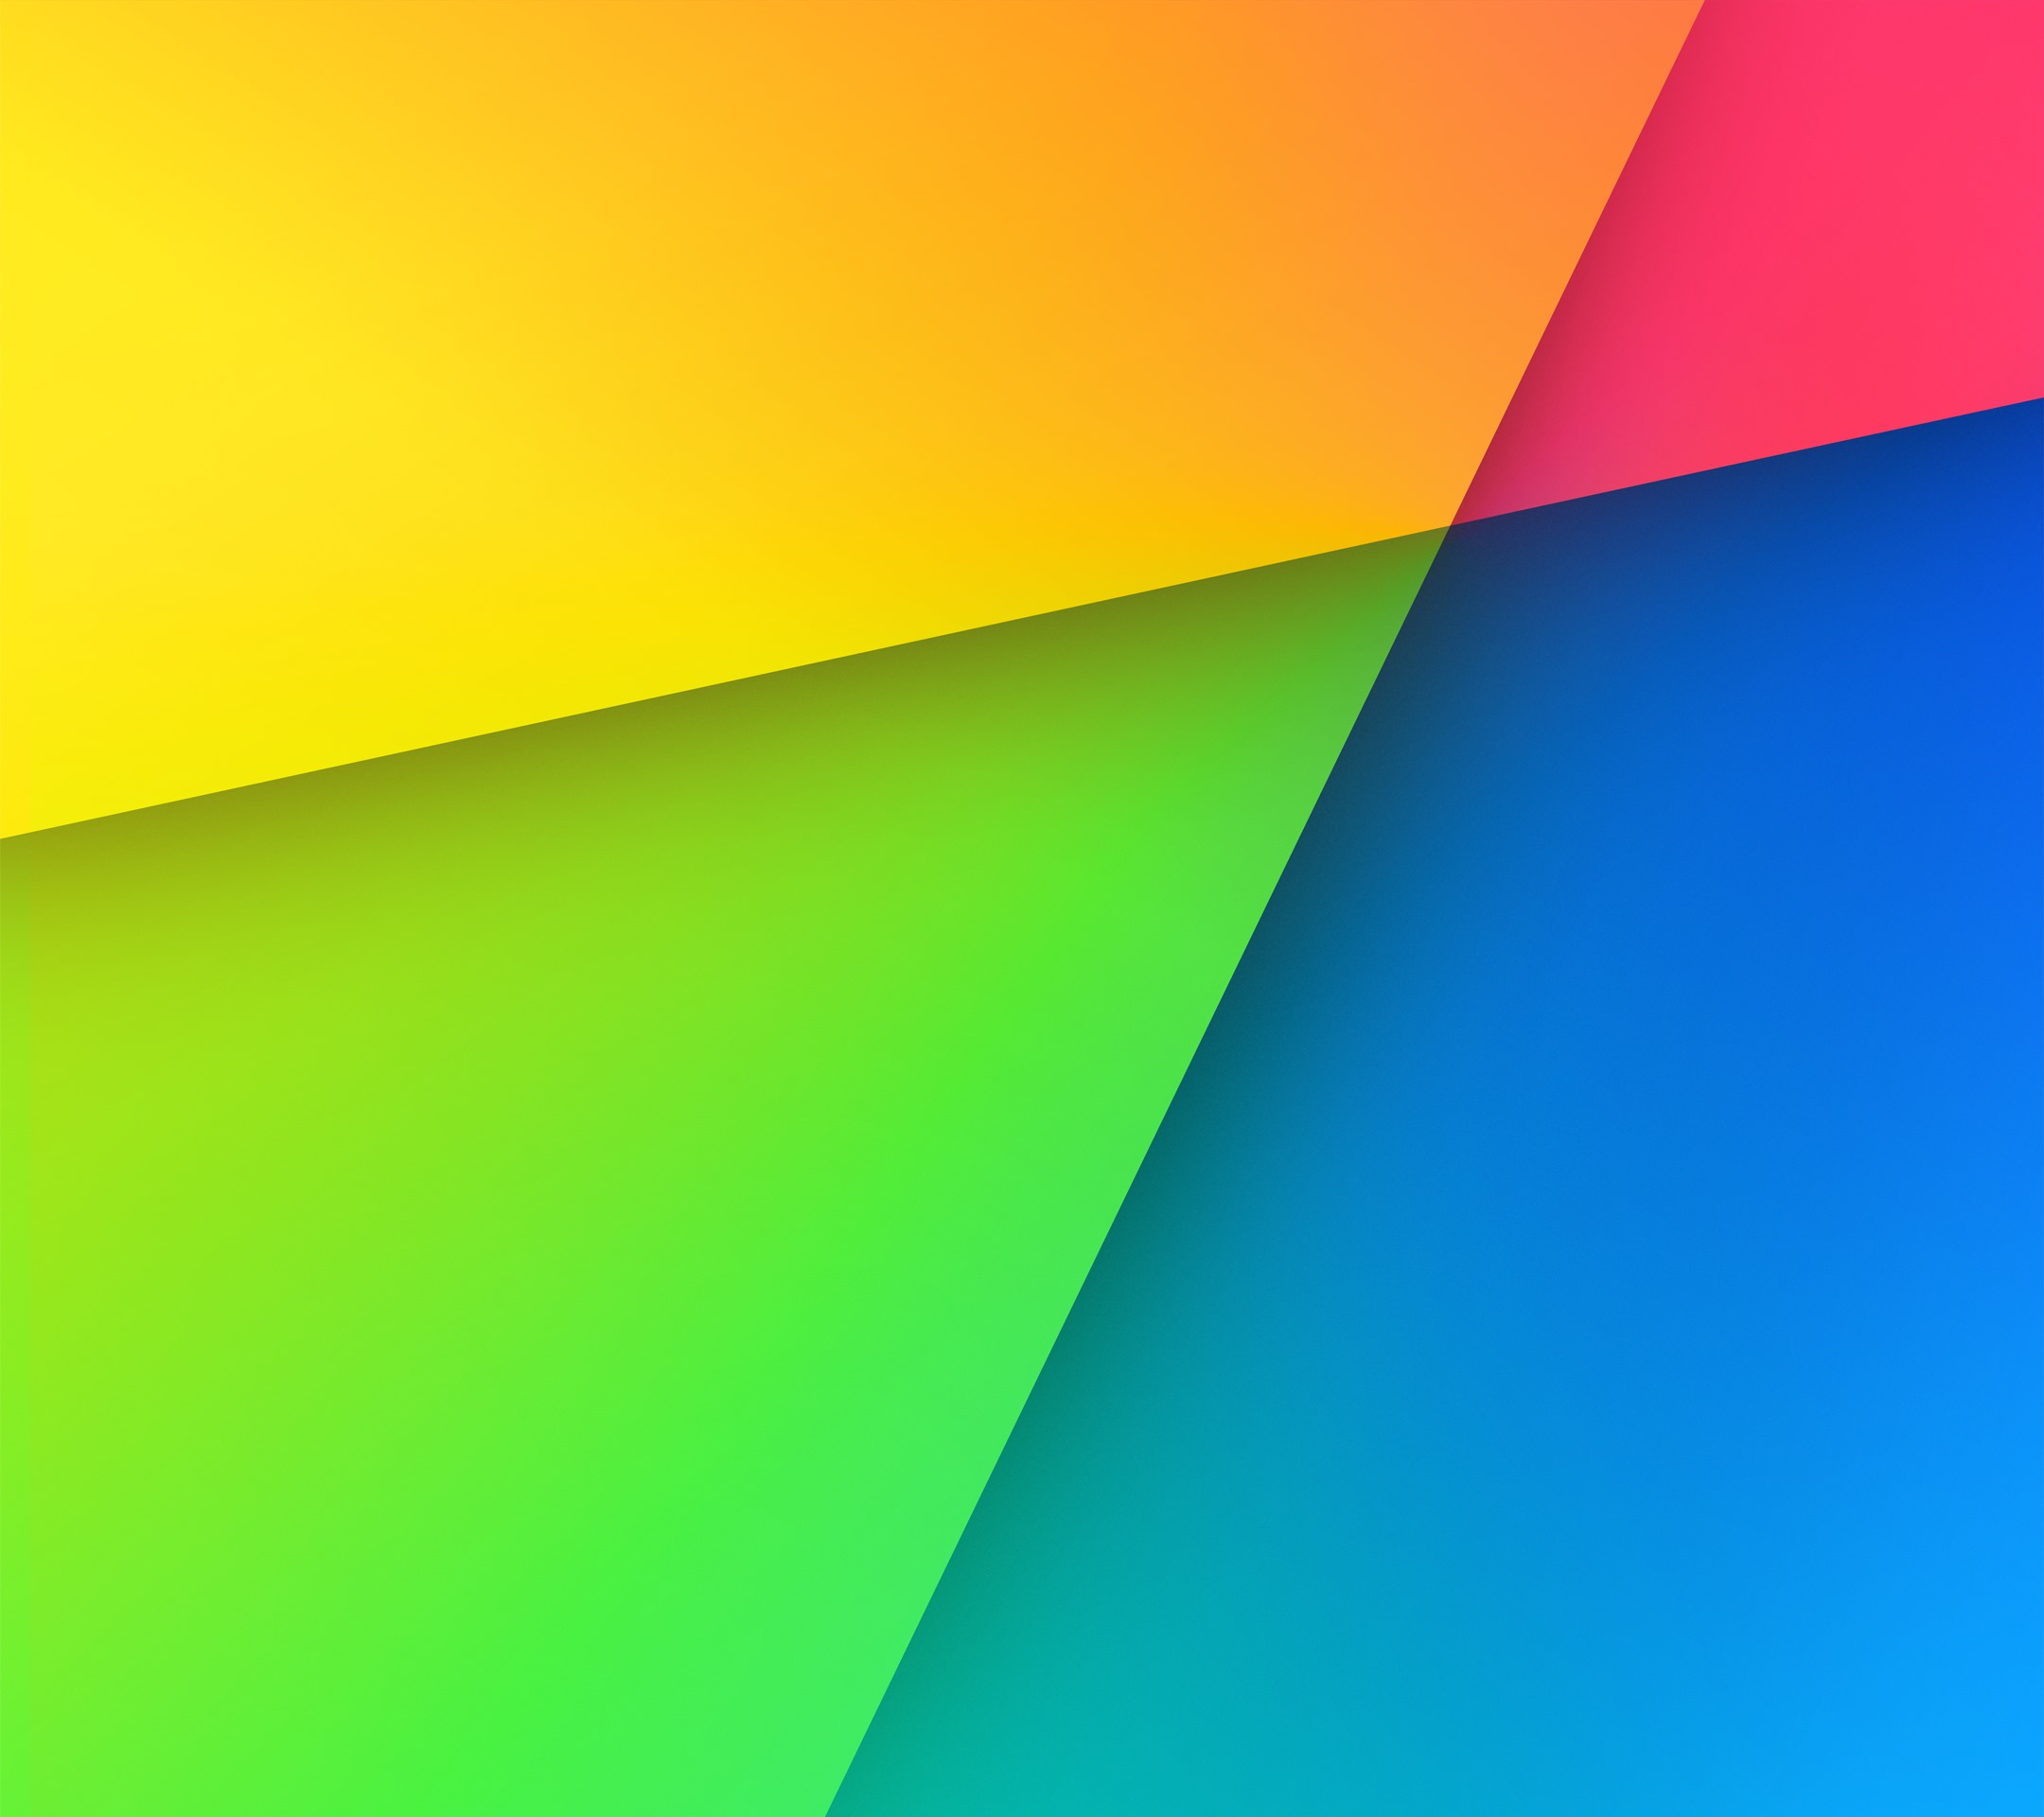 nexus 5x fond d'écran hd,vert,bleu,orange,jaune,couleur